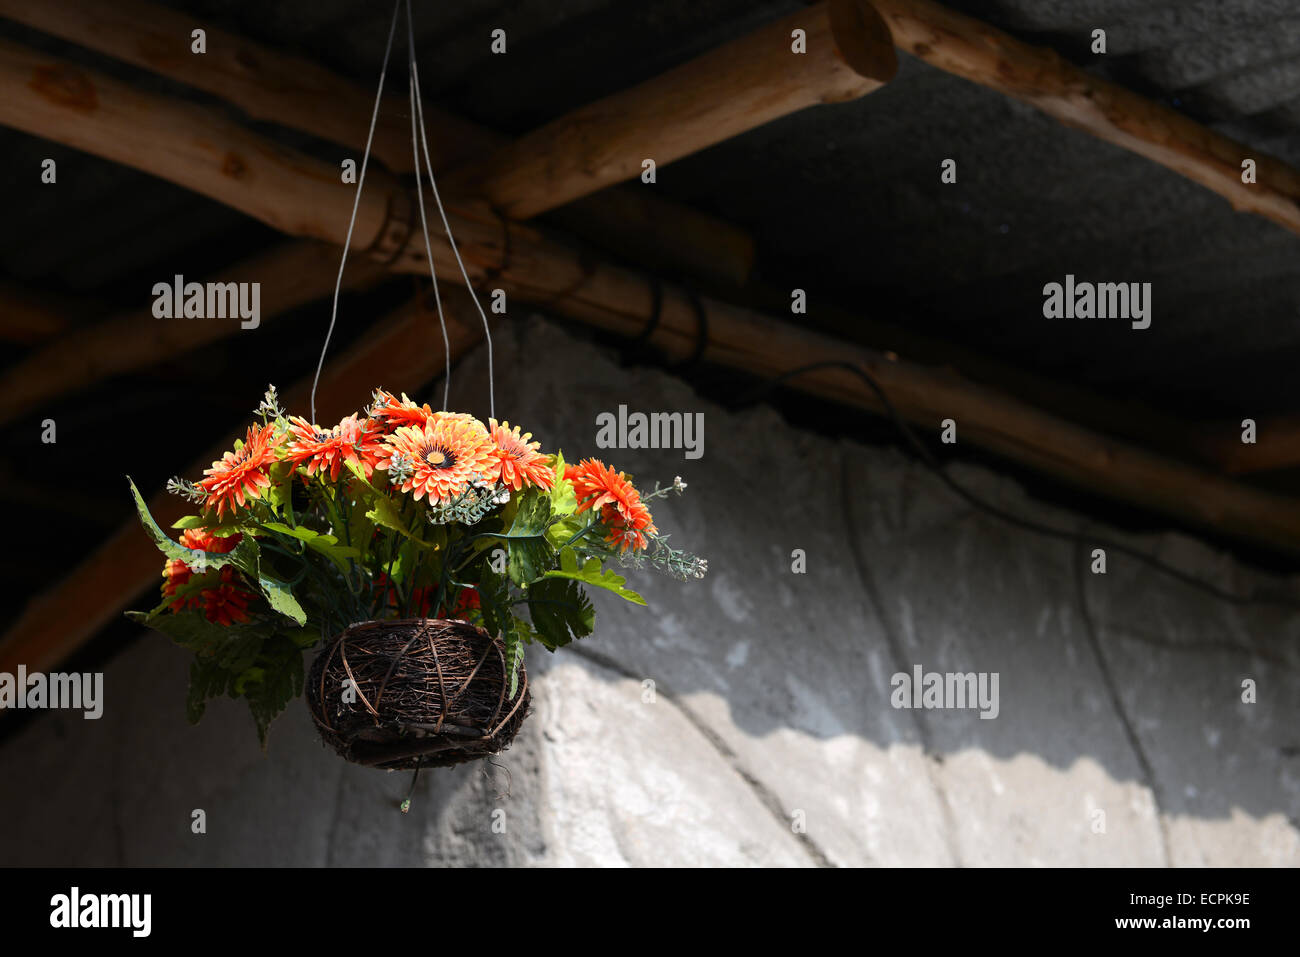 fake flower orange color in hanging basket for decorative home Stock Photo